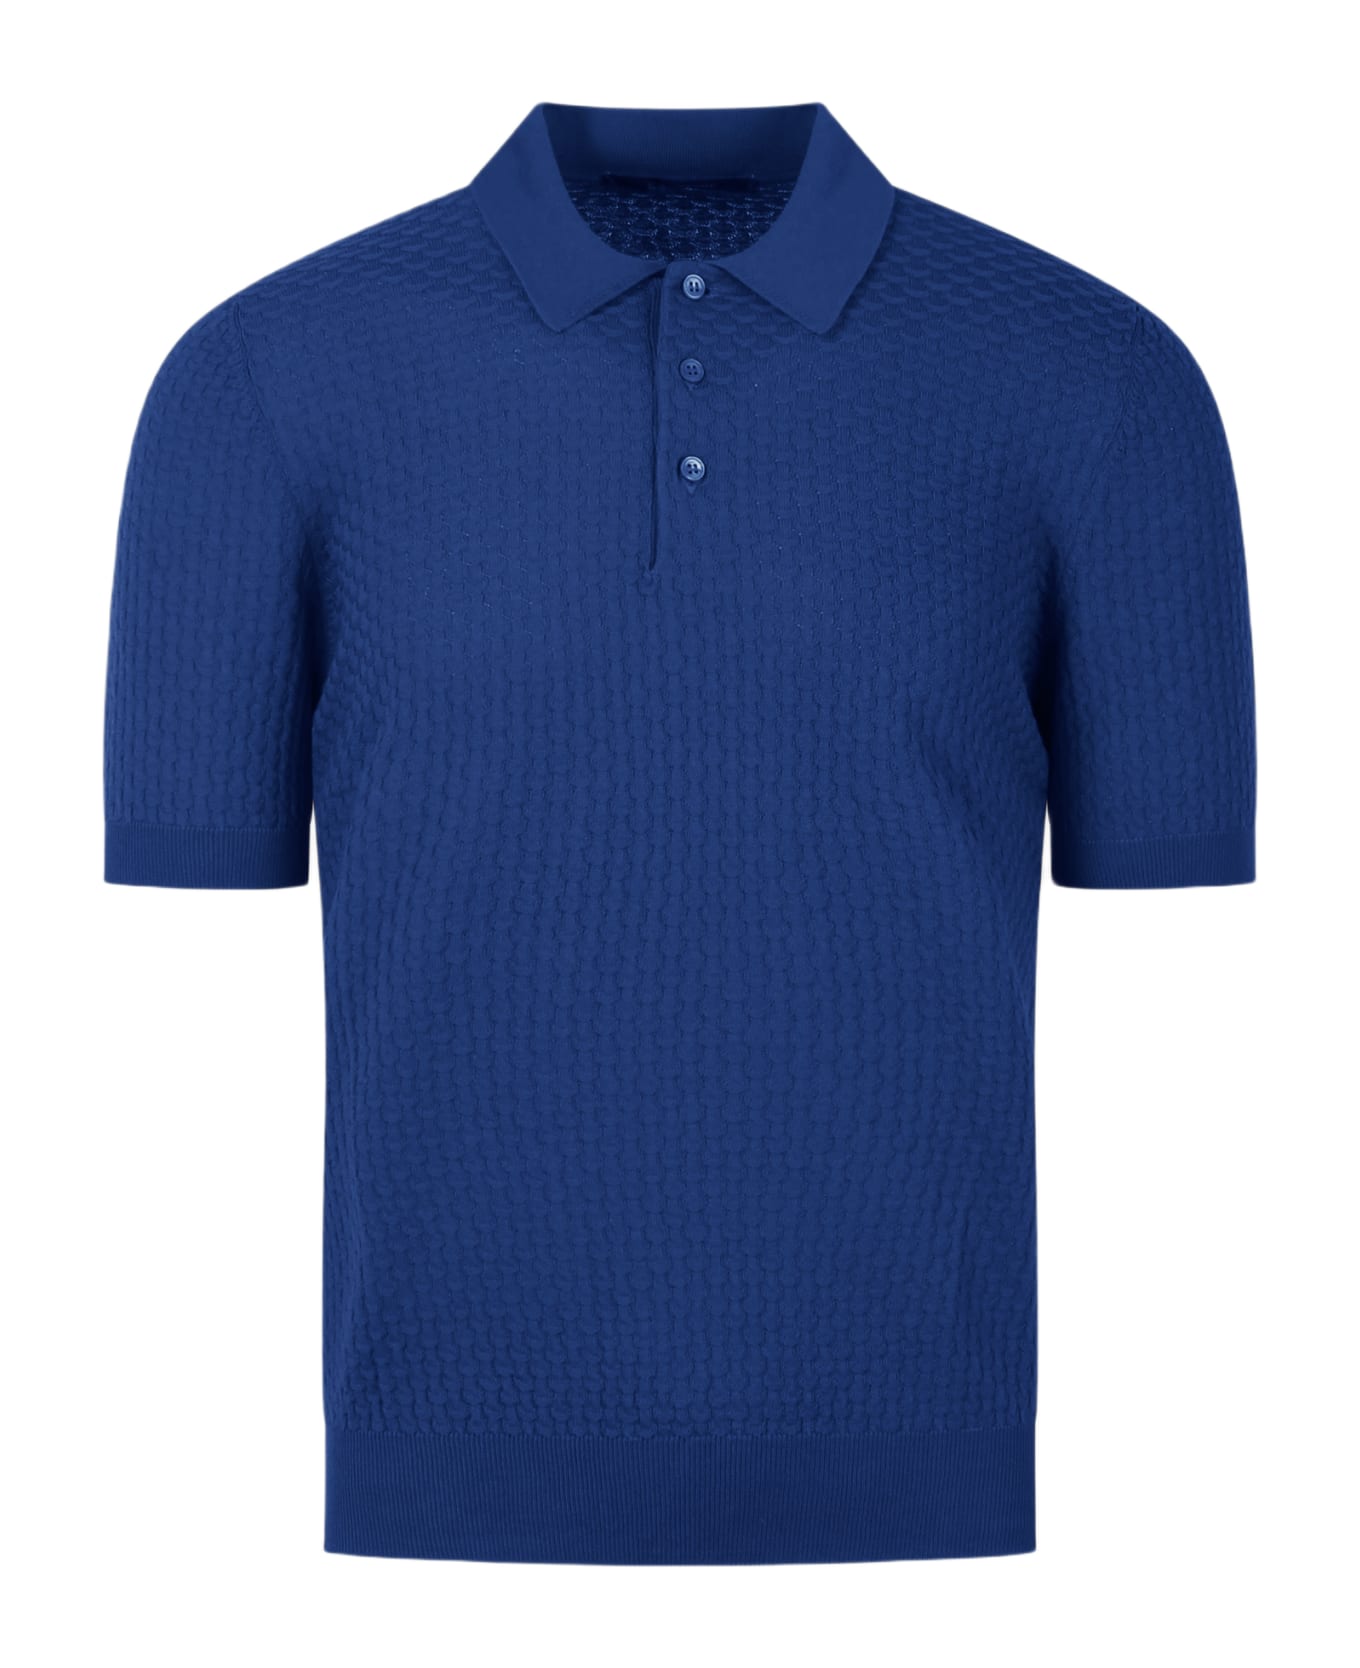 Tagliatore Embossed Cotton Knit Polo Shirt - Blue